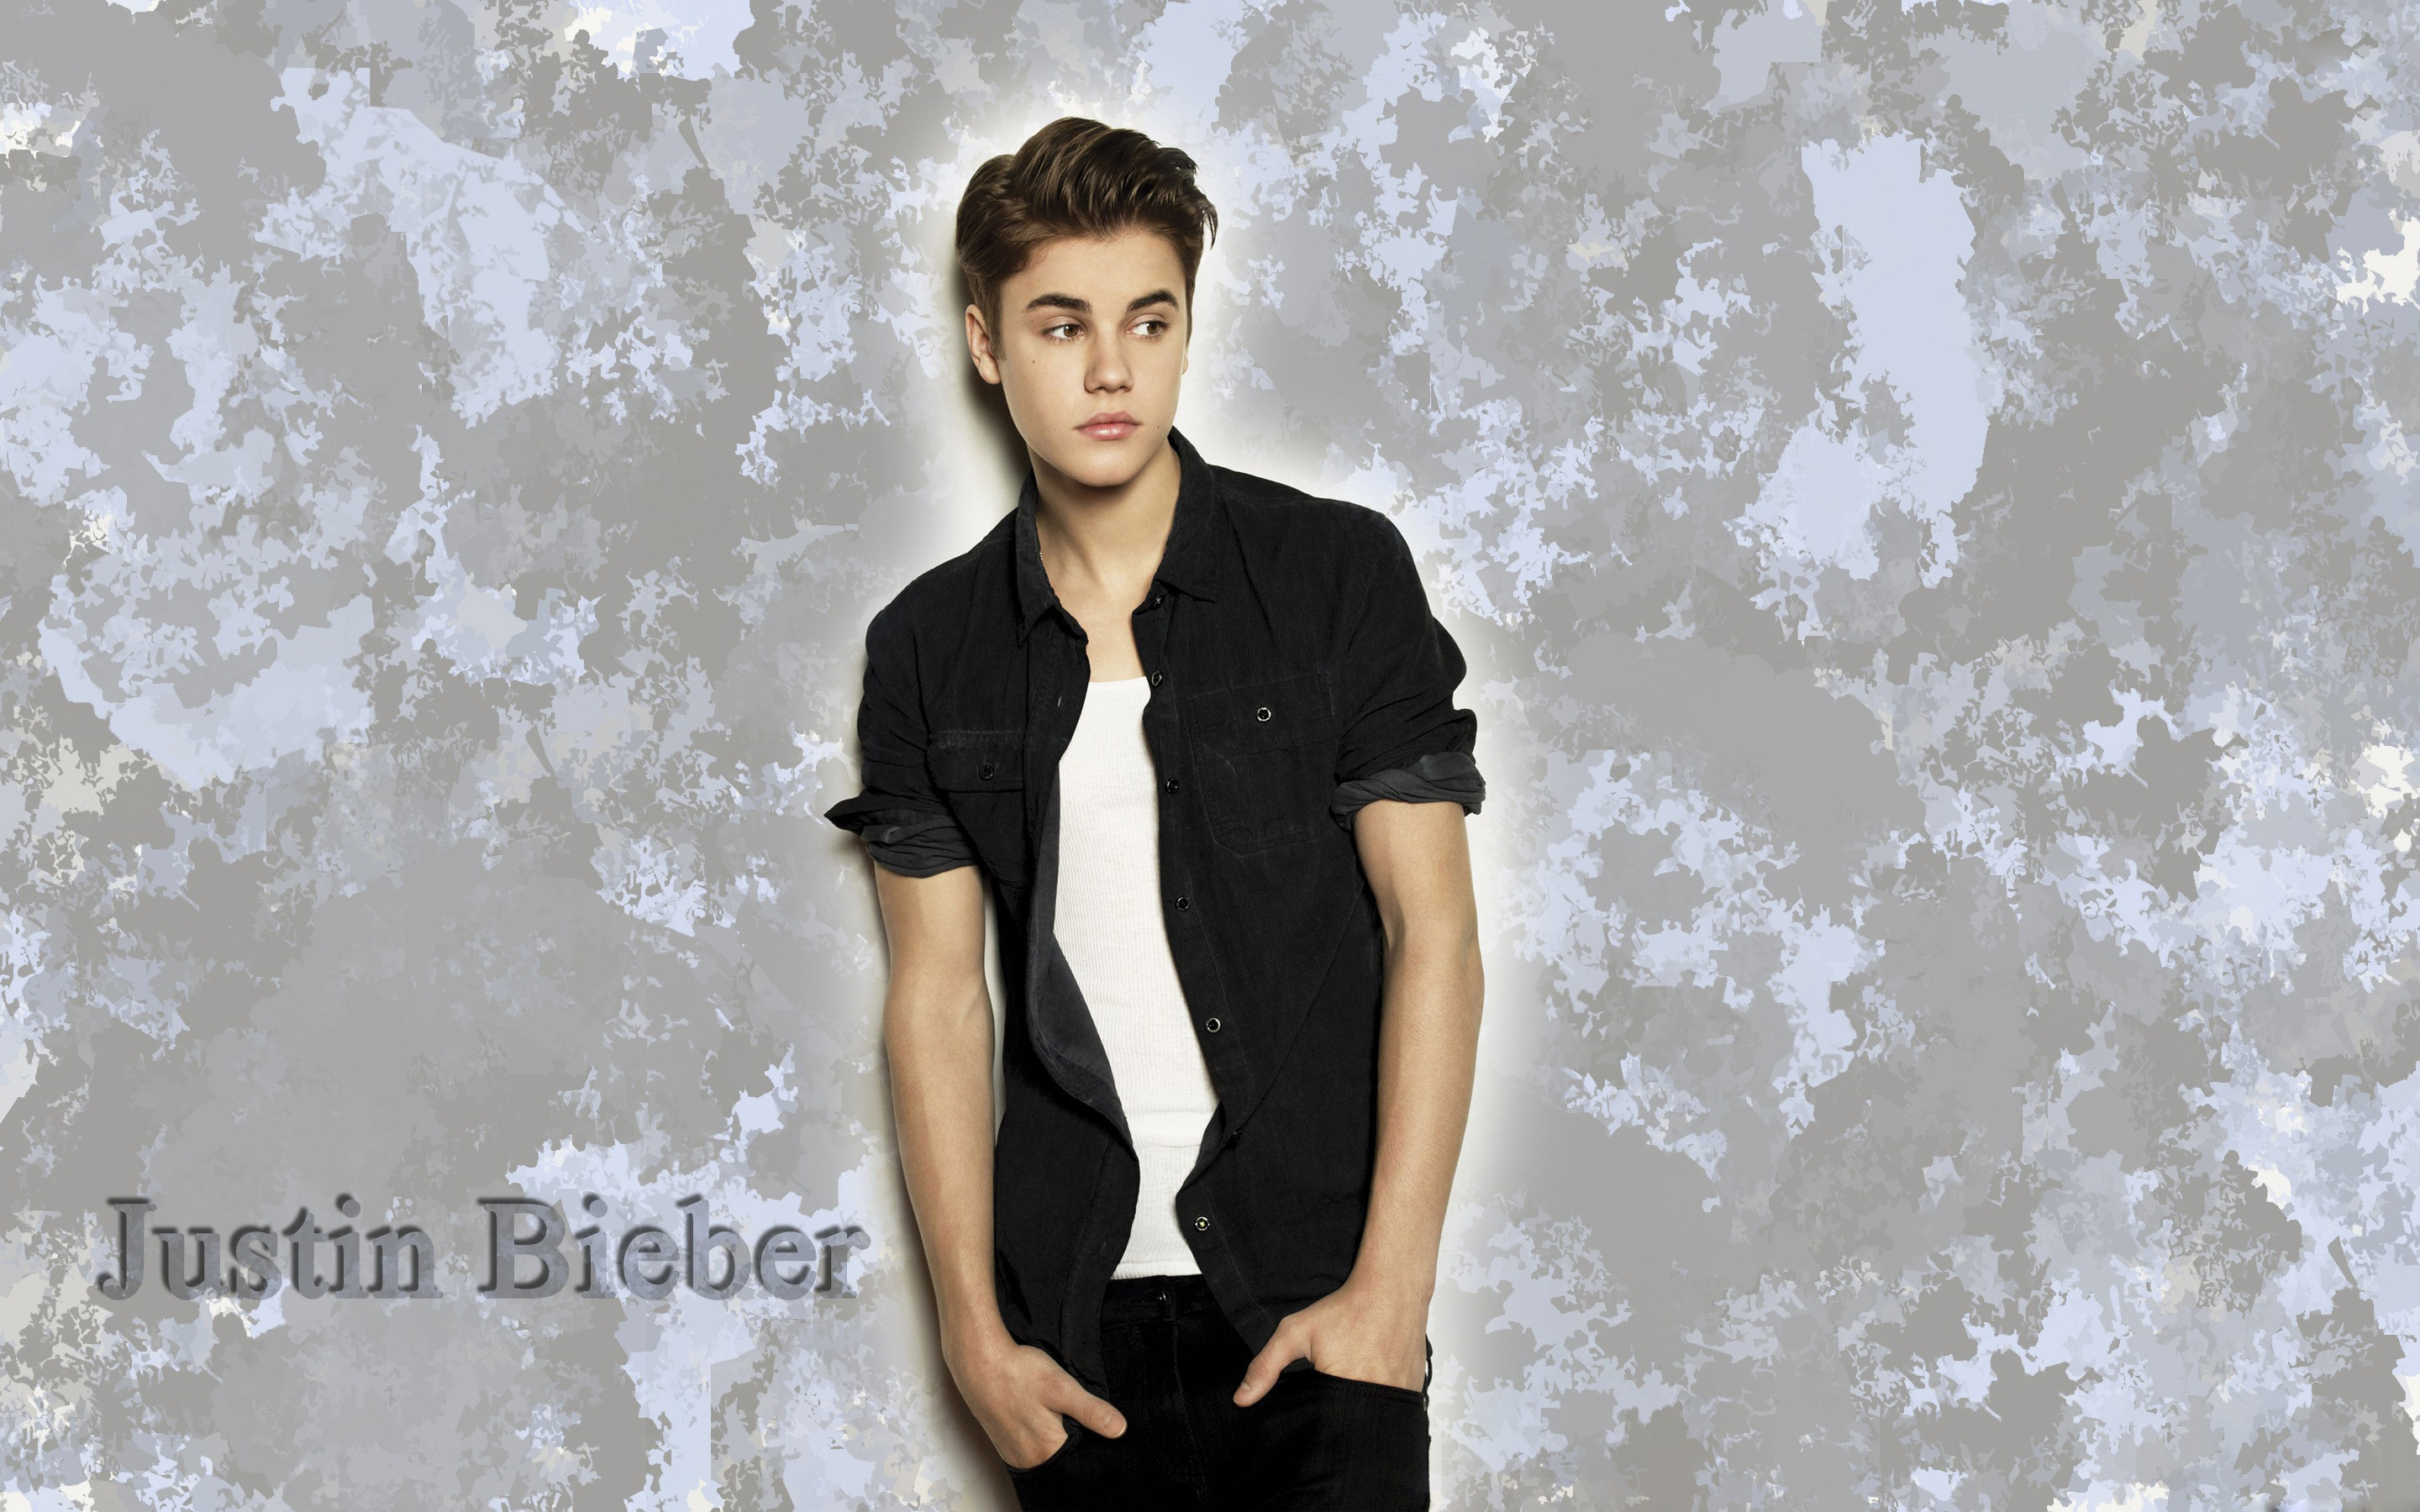 Justin Bieber Wallpaper High Quality